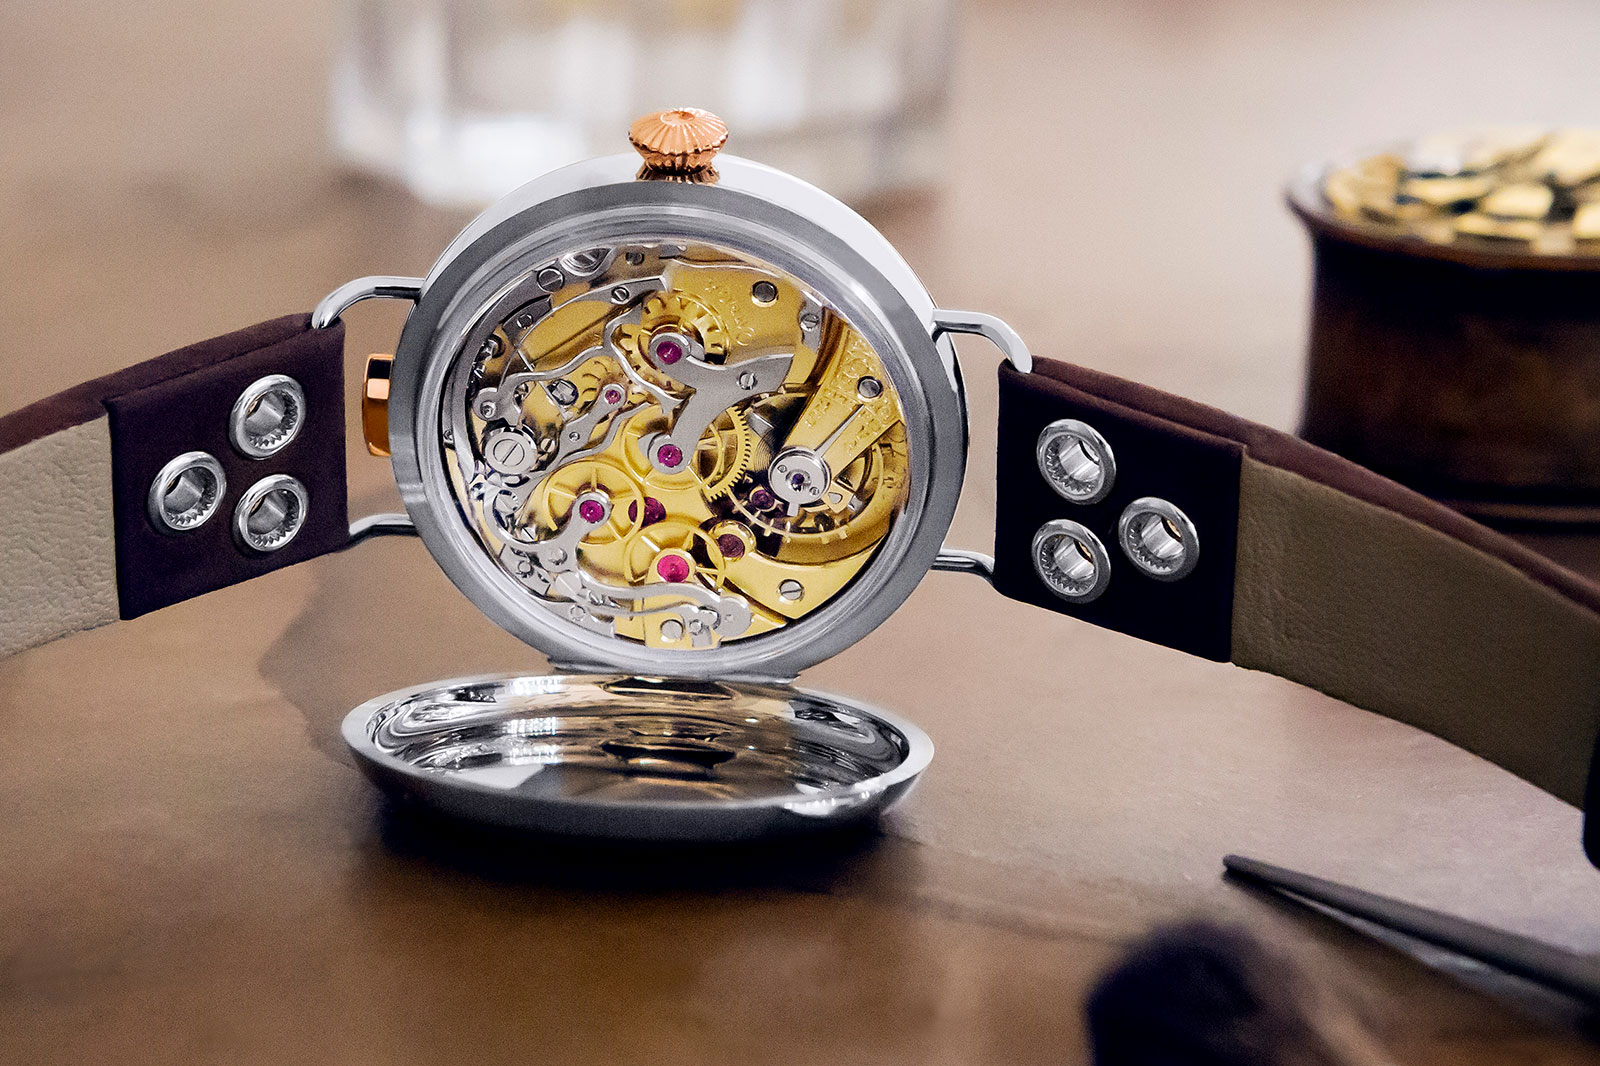 De Omega First Wrist-Chronograph Limited Edition toont het antieke 18”’CHRO uurwerk